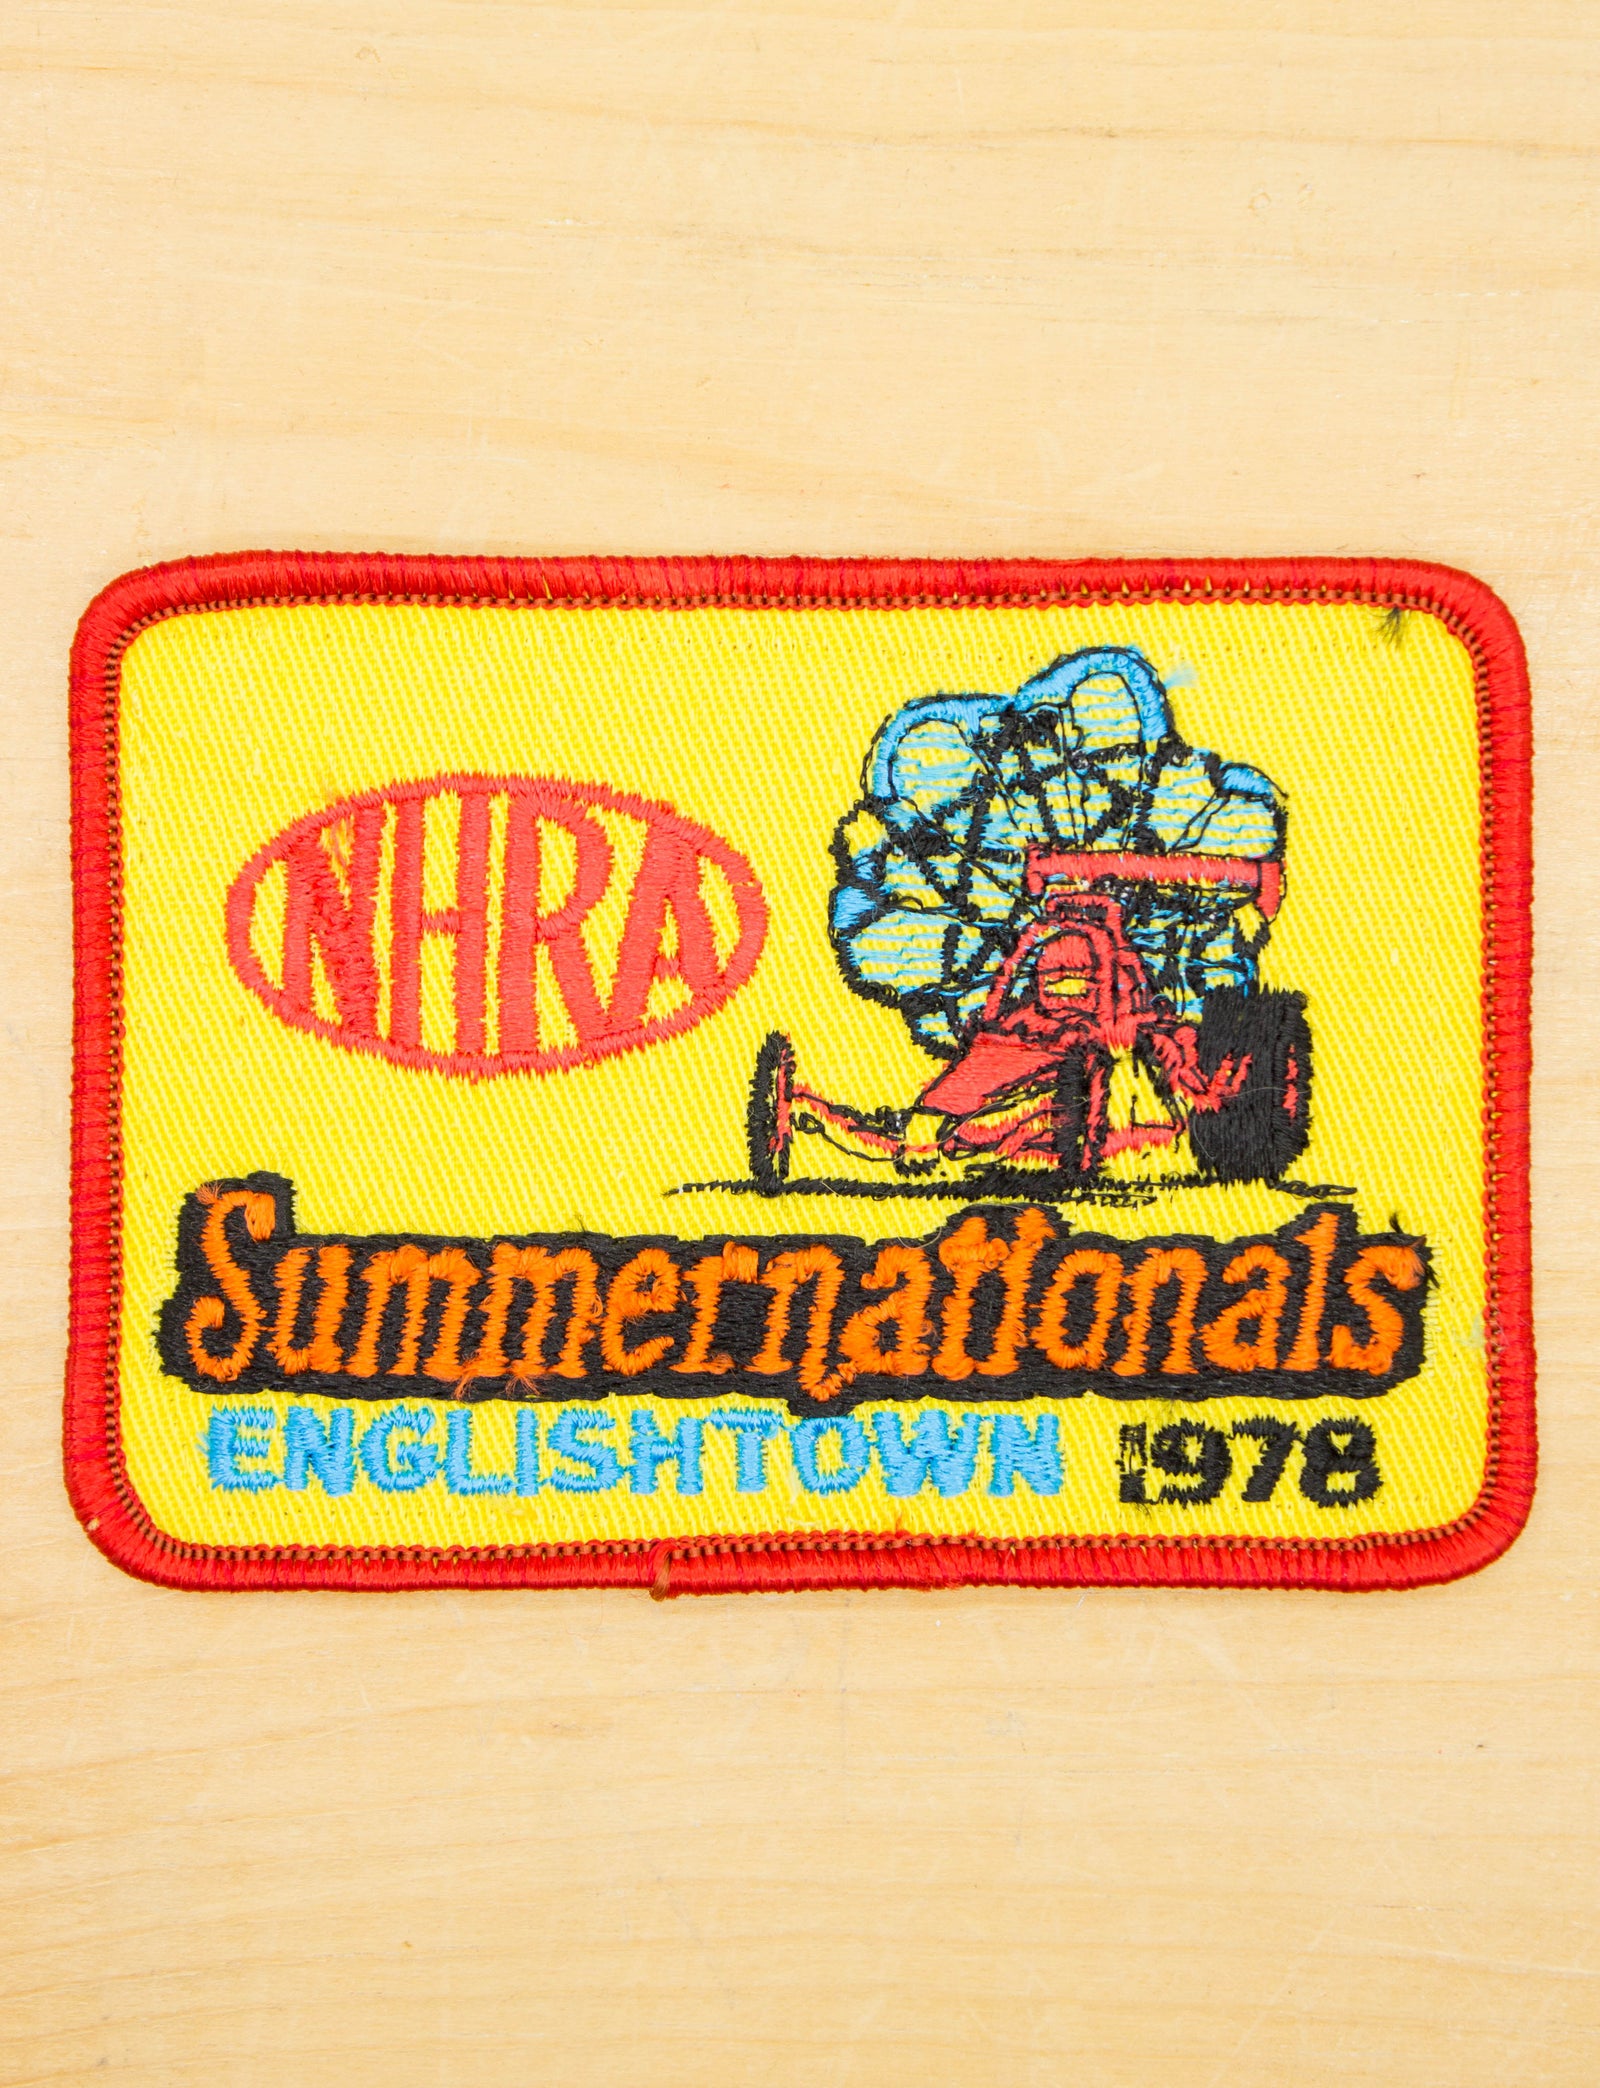 Vintage NHRA Summernationals Englishtown Drag Racing Patches